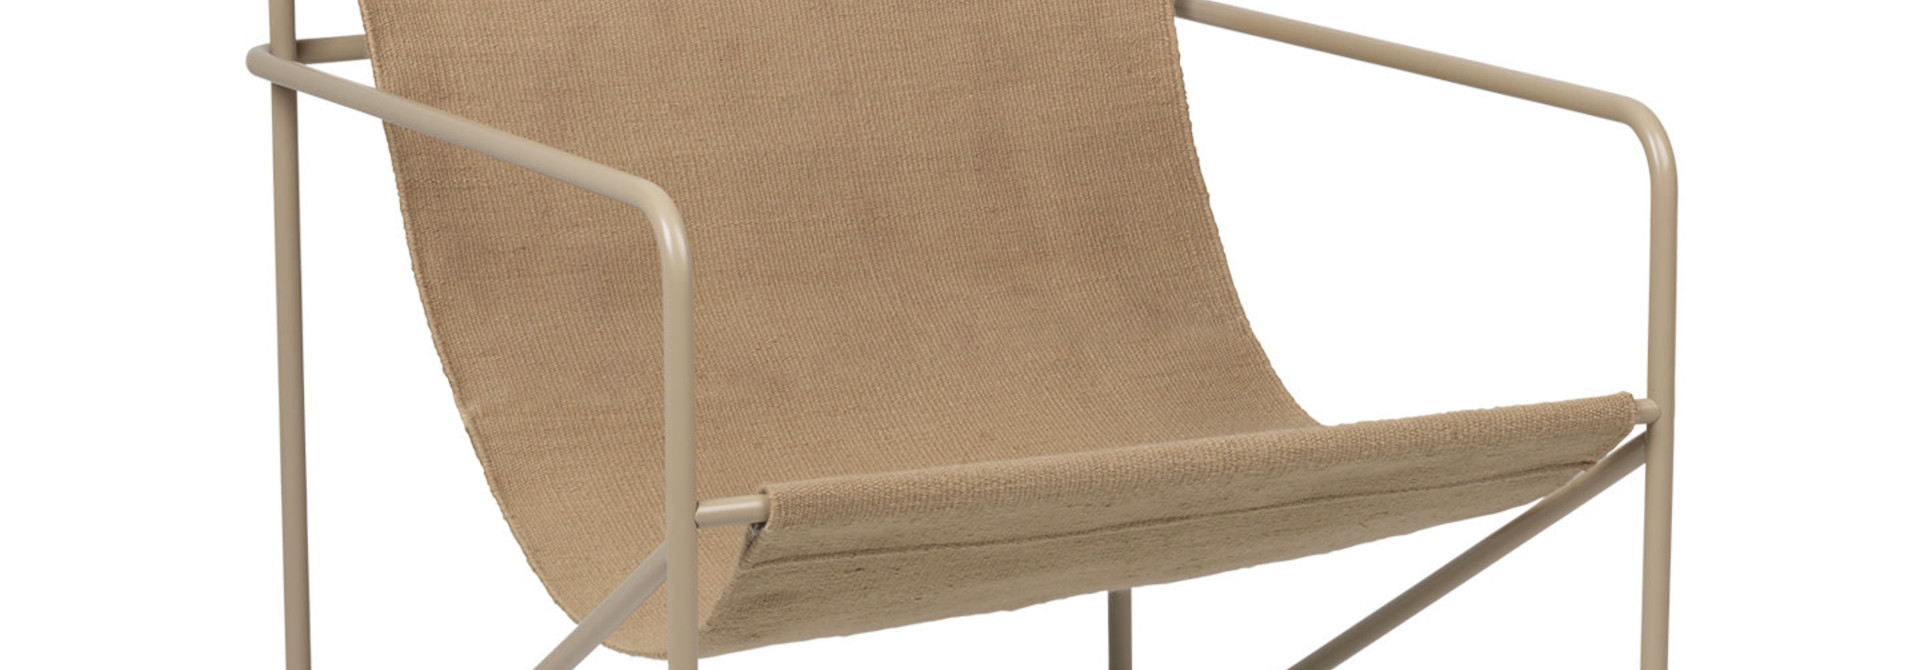 Desert Lounge Chair - Cashmere/Sand